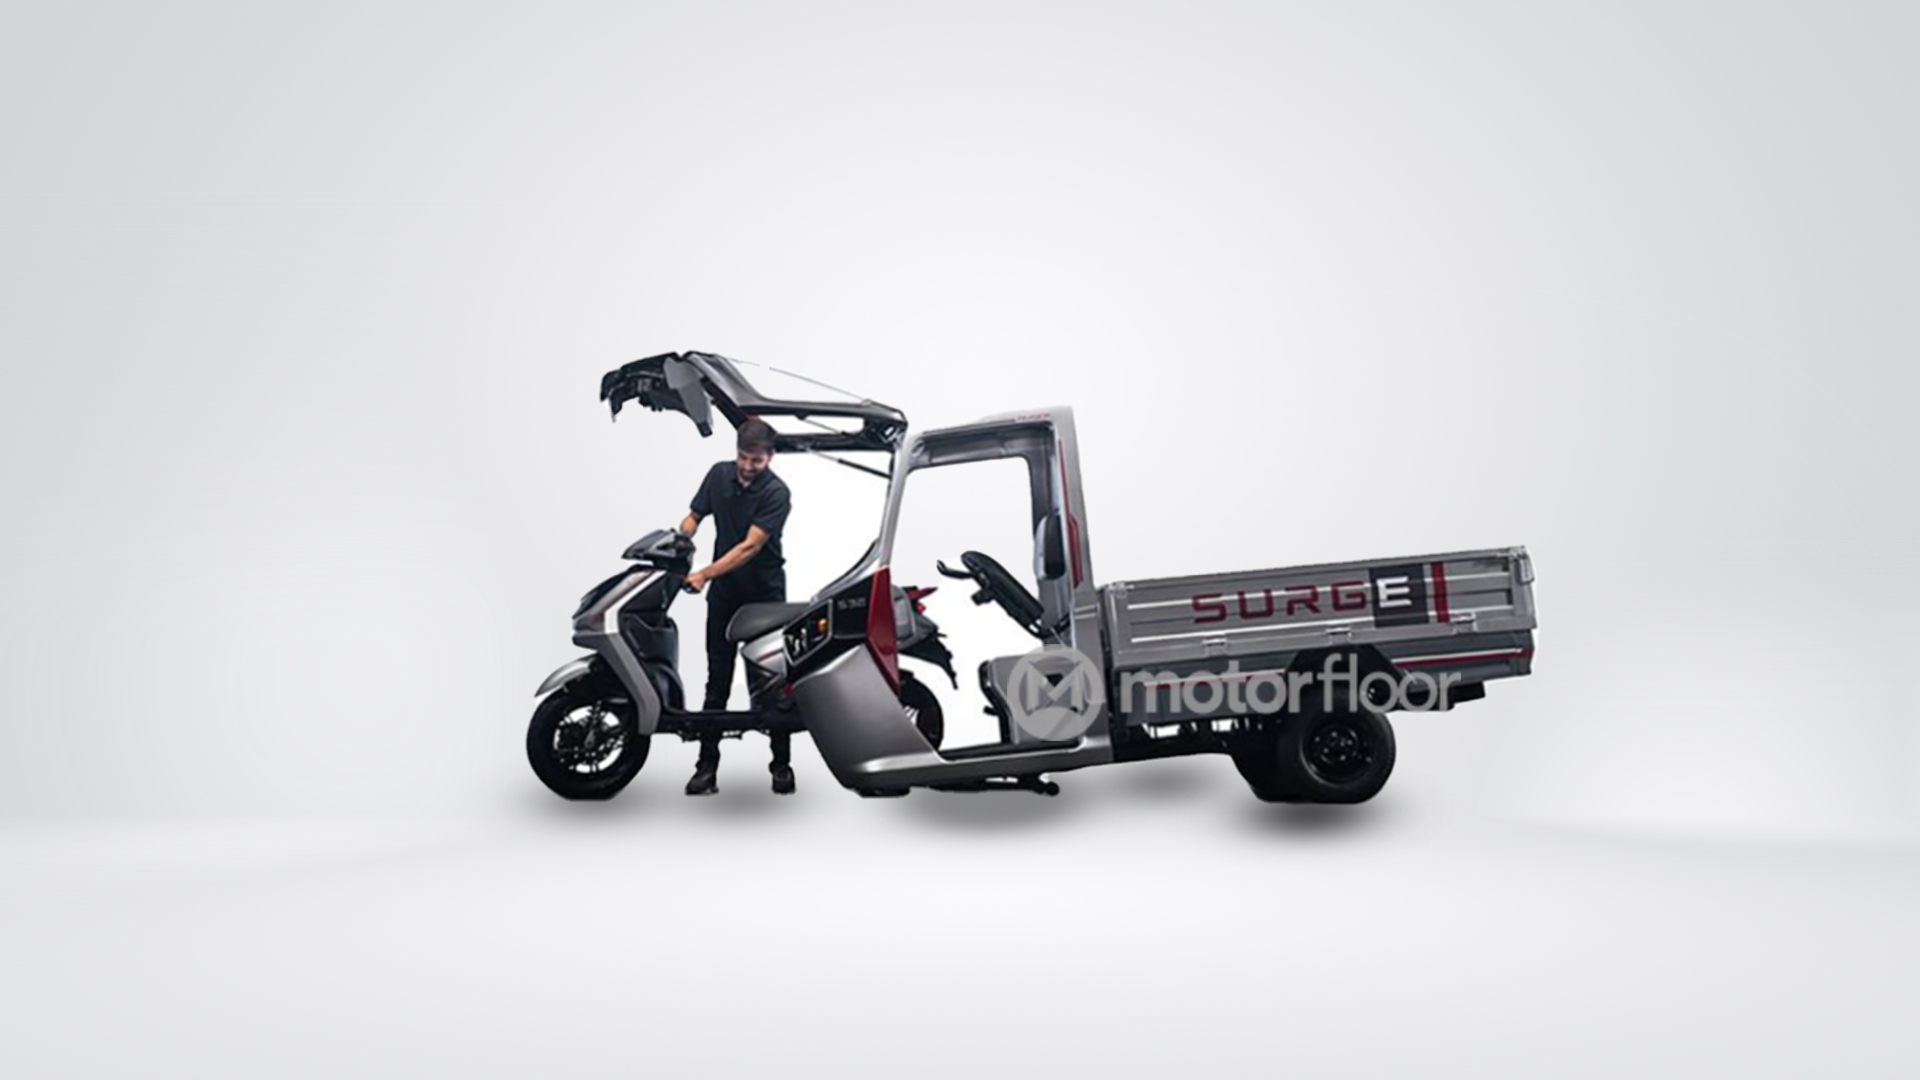 Hero MotoCorp unveils convertible Electric Vehicle